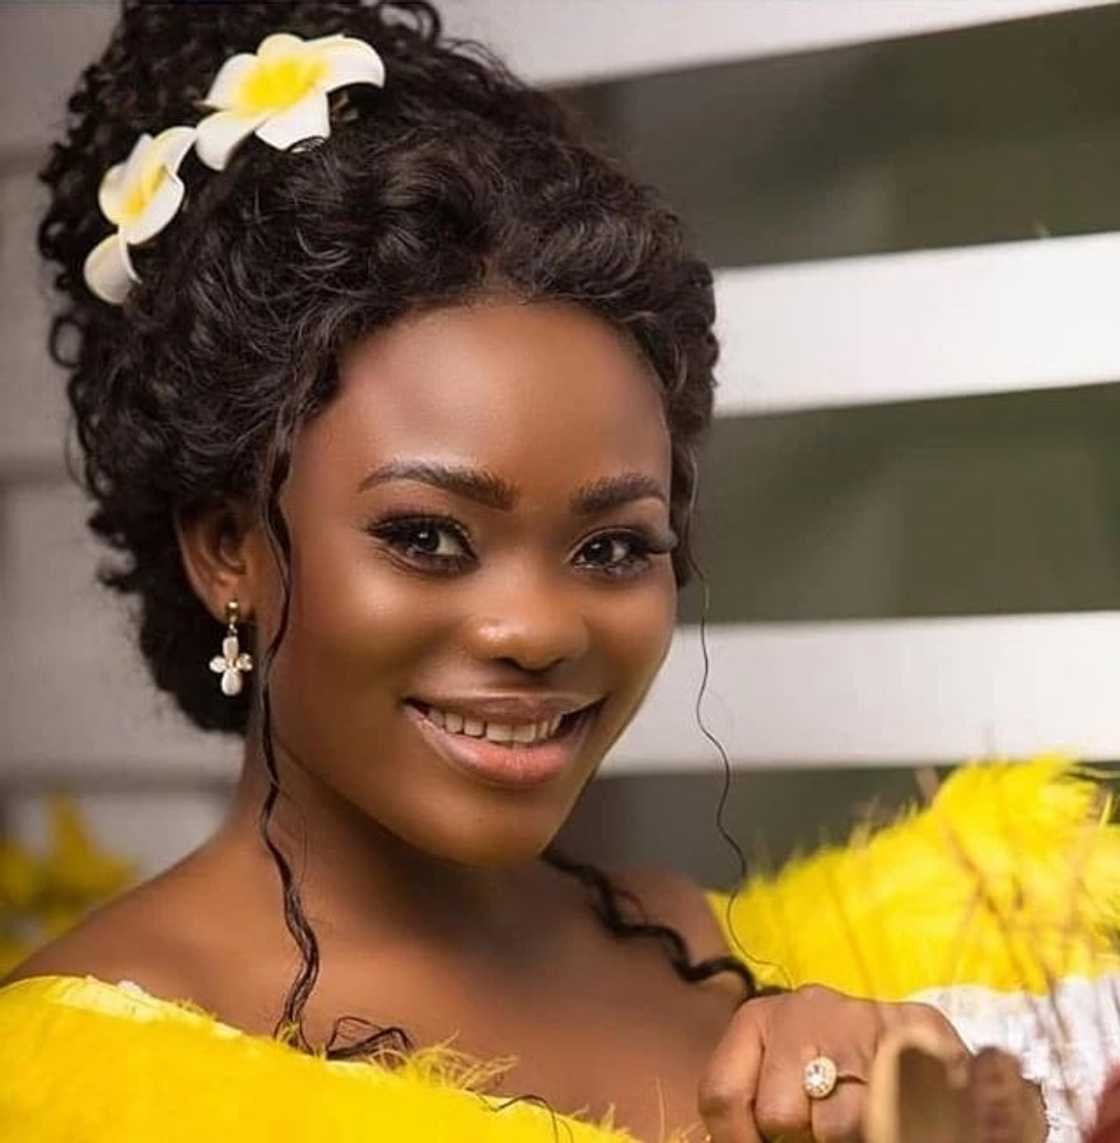 Akua, Baci, Ama & Emefa: Here Are All The Successful Ghana's Most Beautiful Queens We Have Seen So Far